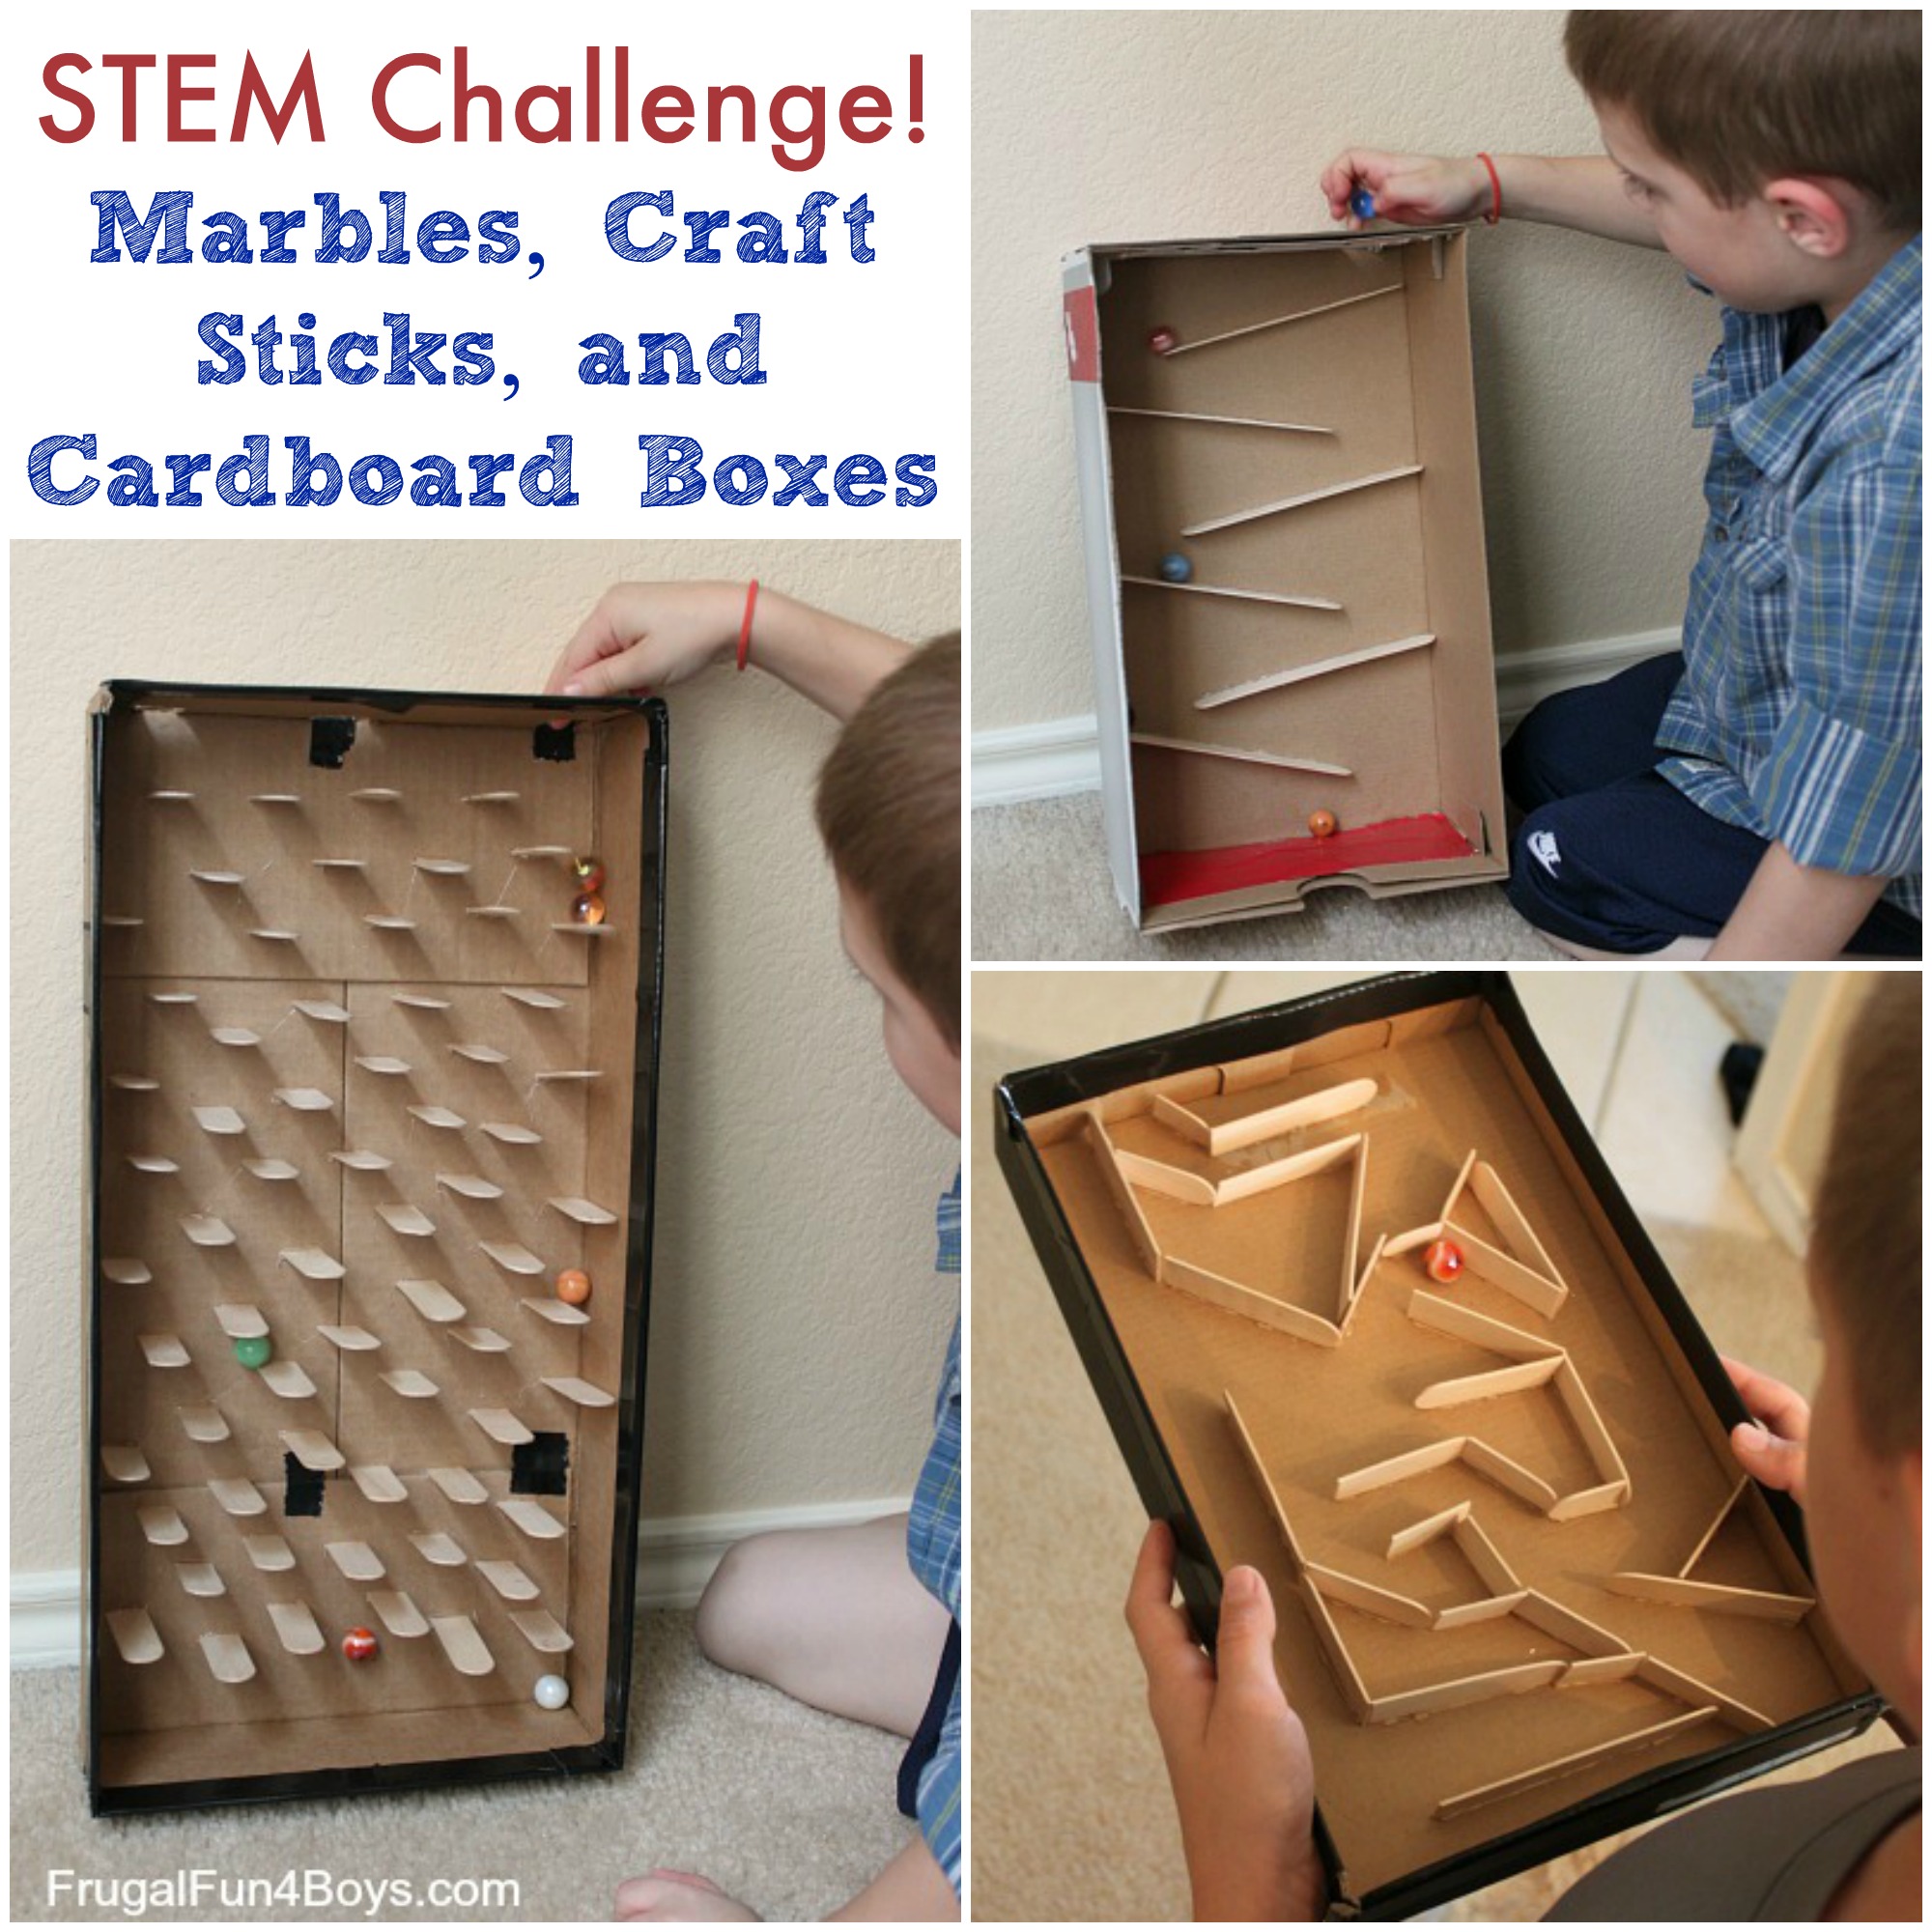 STEM Challenge:  Marbles, Craft Sticks, and Cardboard Boxes